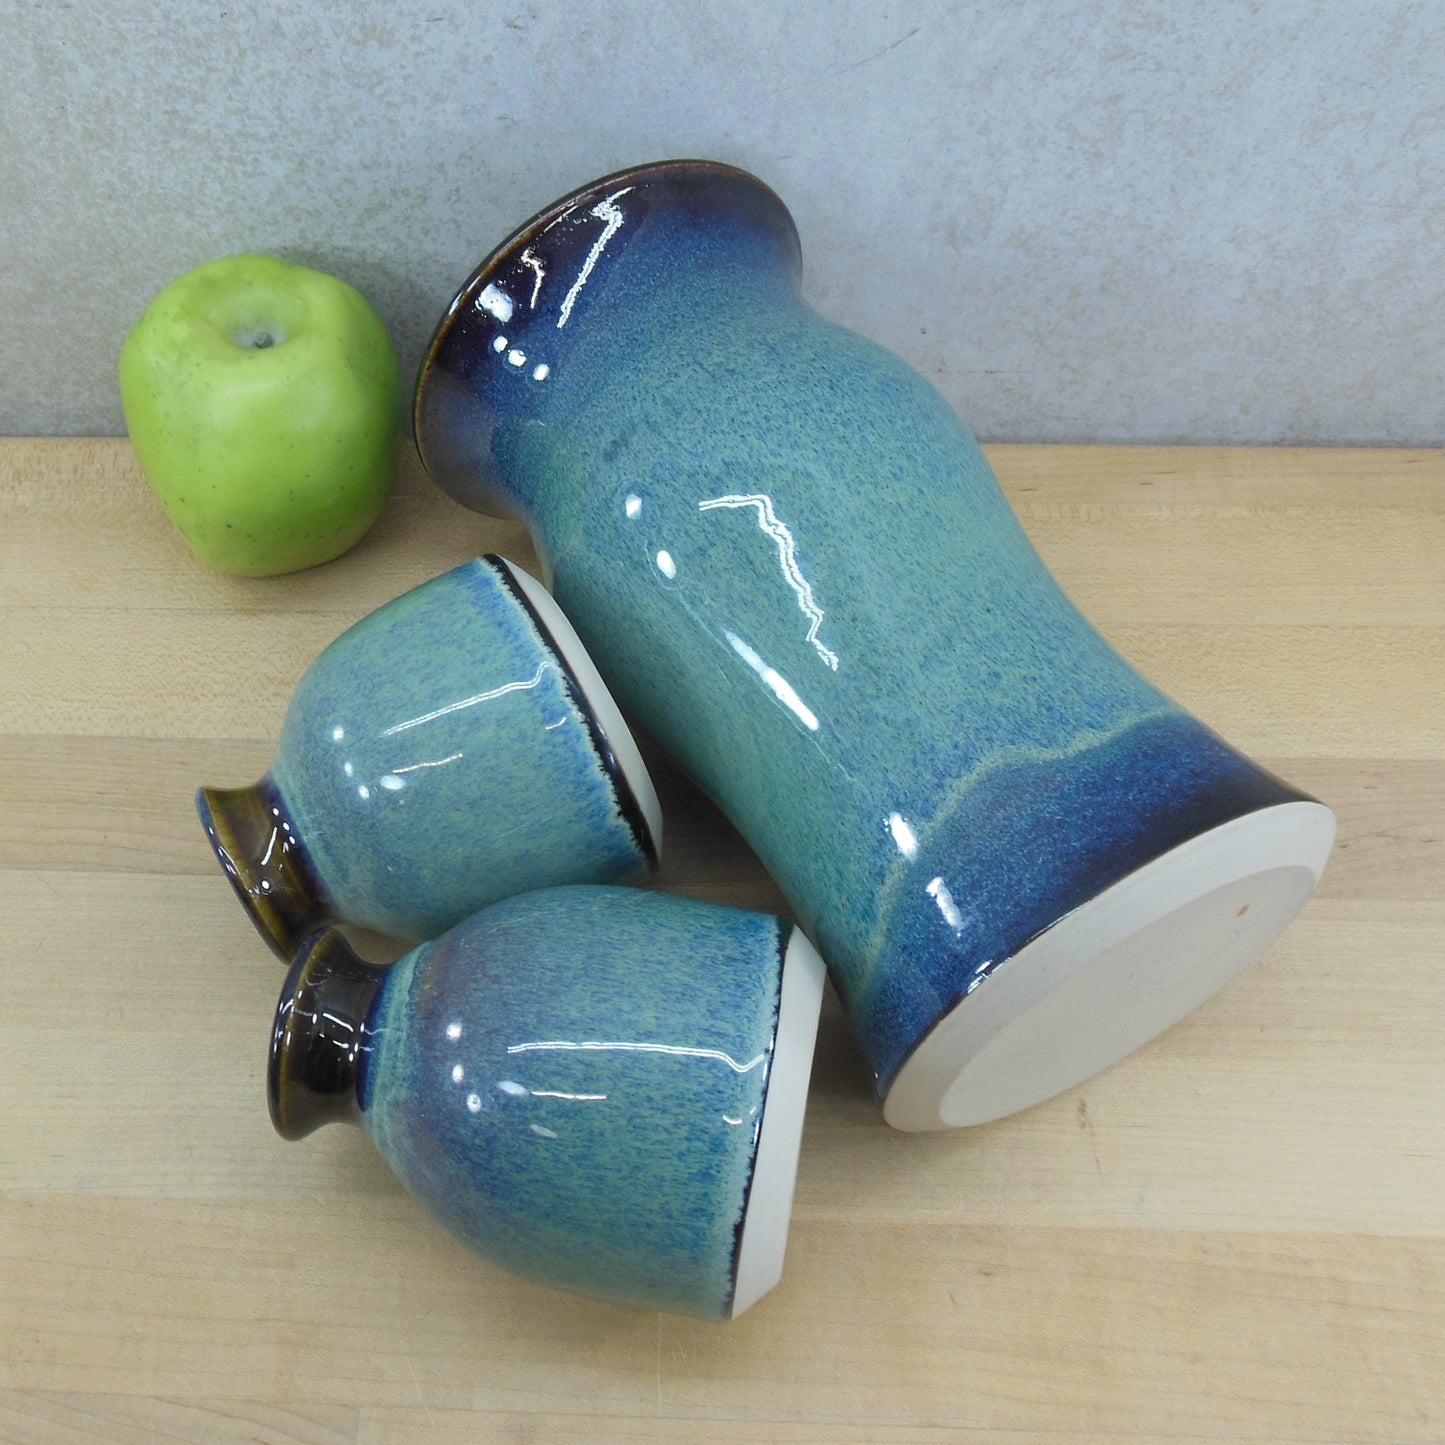 Robin Morris Dunnmorr Studio Signed Pottery Vases 3 Lot Teal Blue